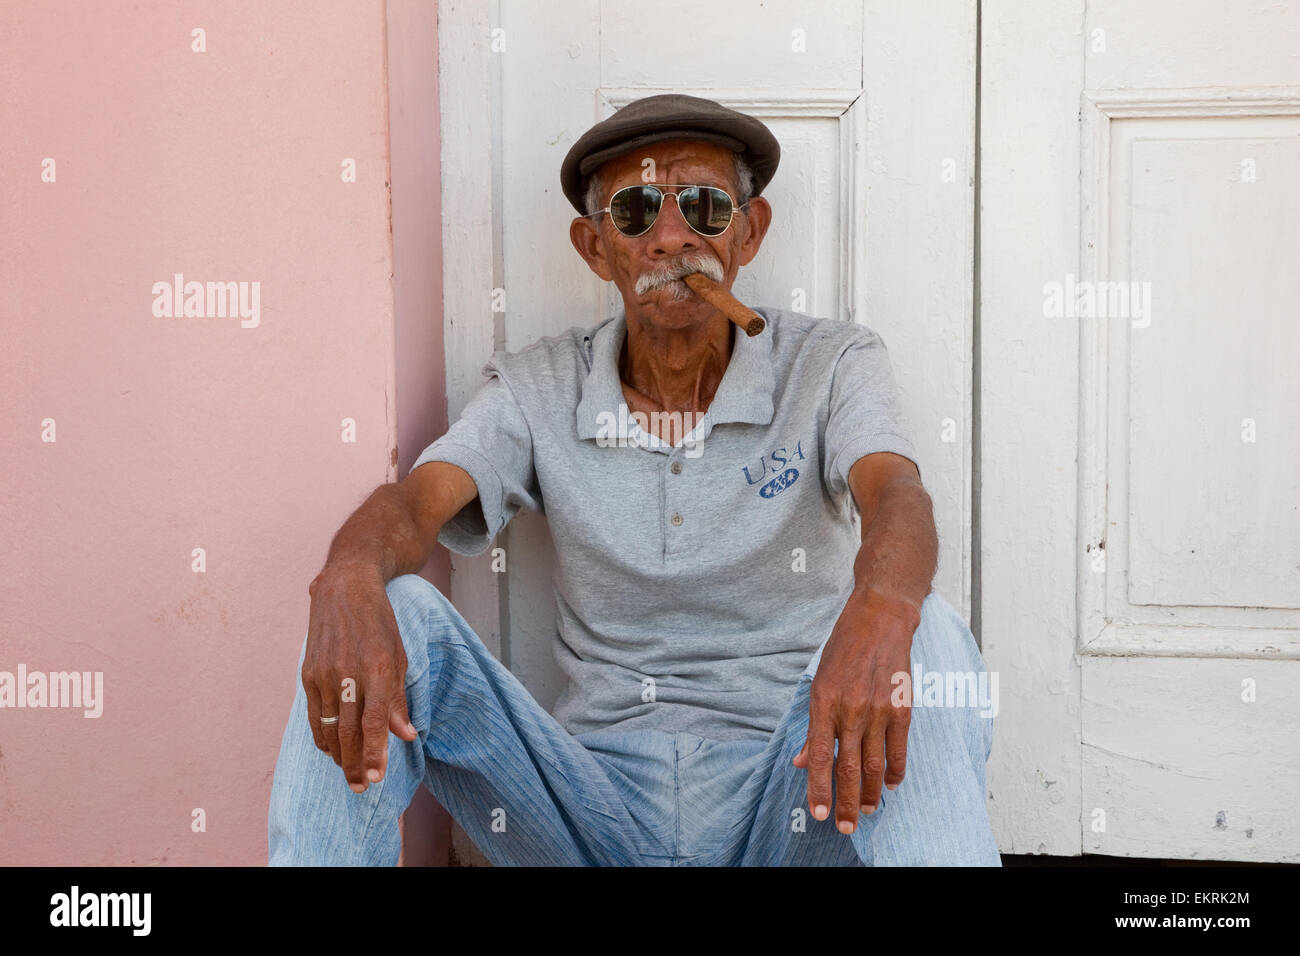 Cuban man with sunglasses smoking a cigar in a doorway Stock Photo